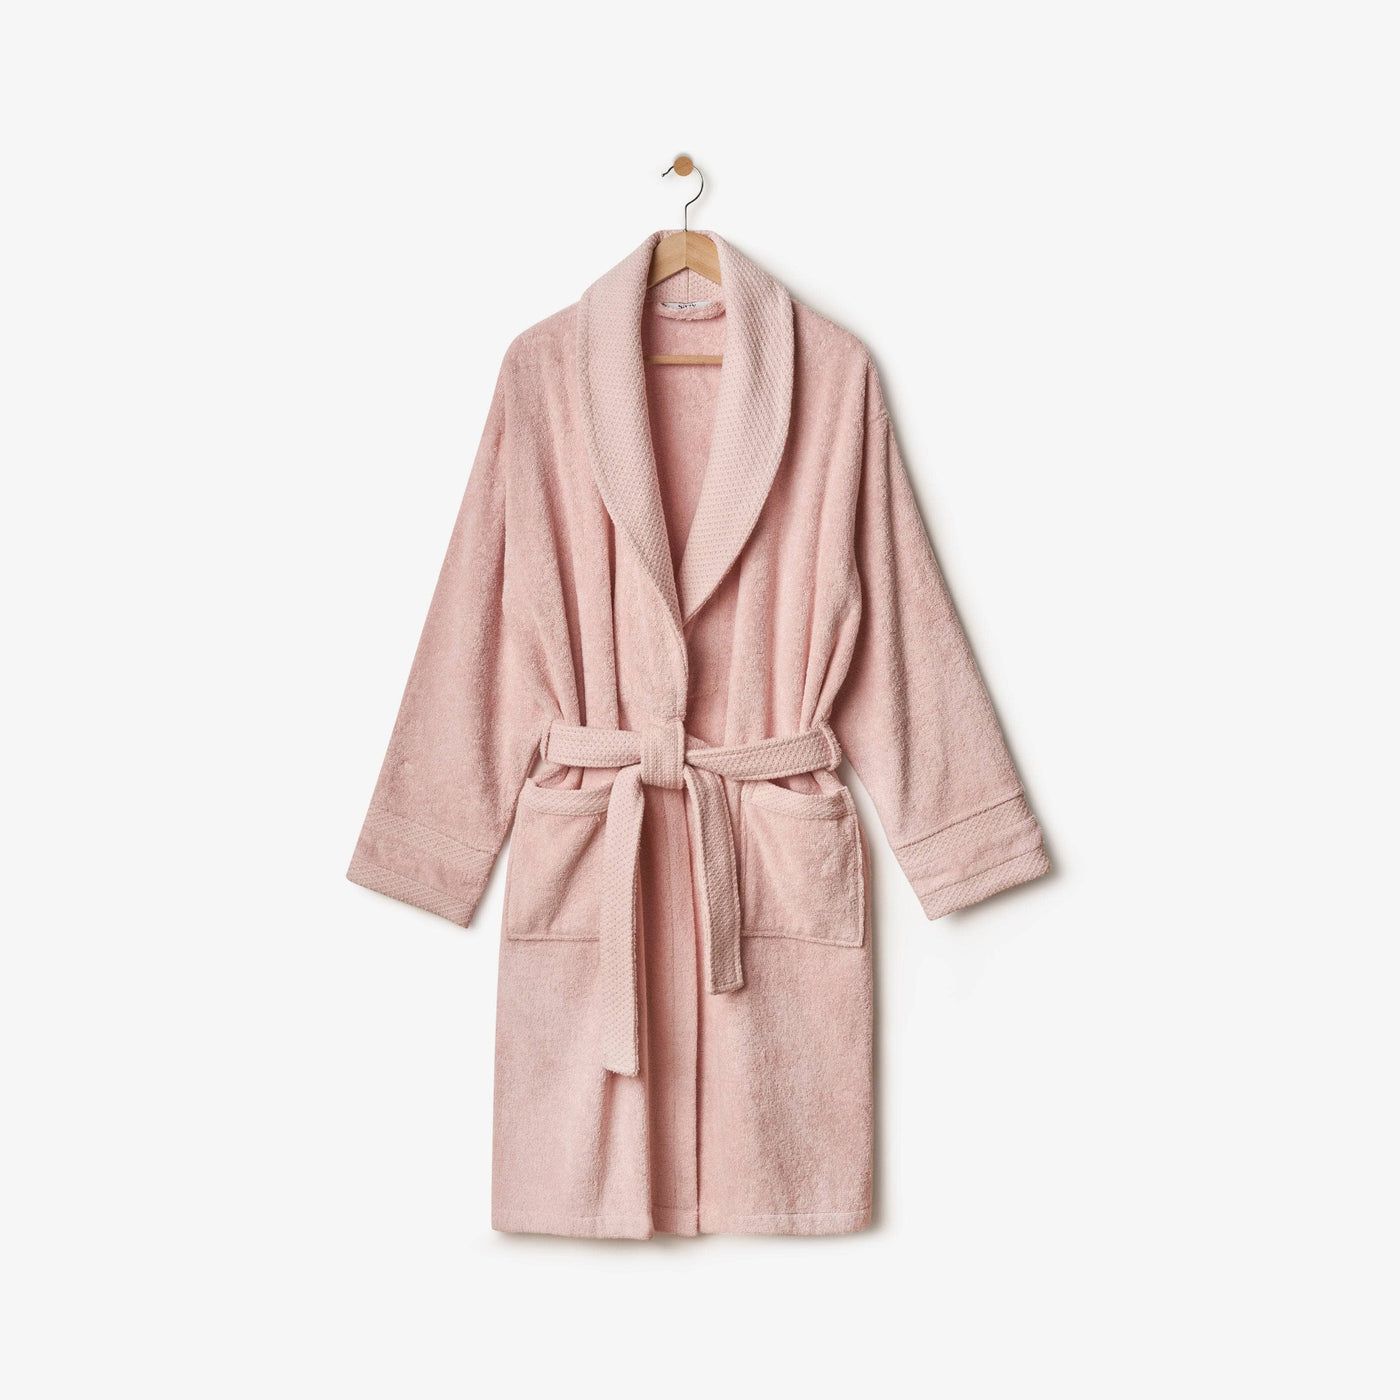 Rosalie Aqua Fibro Extra Soft 100% Turkish Cotton Women's Dressing Gown, Pink, M 1